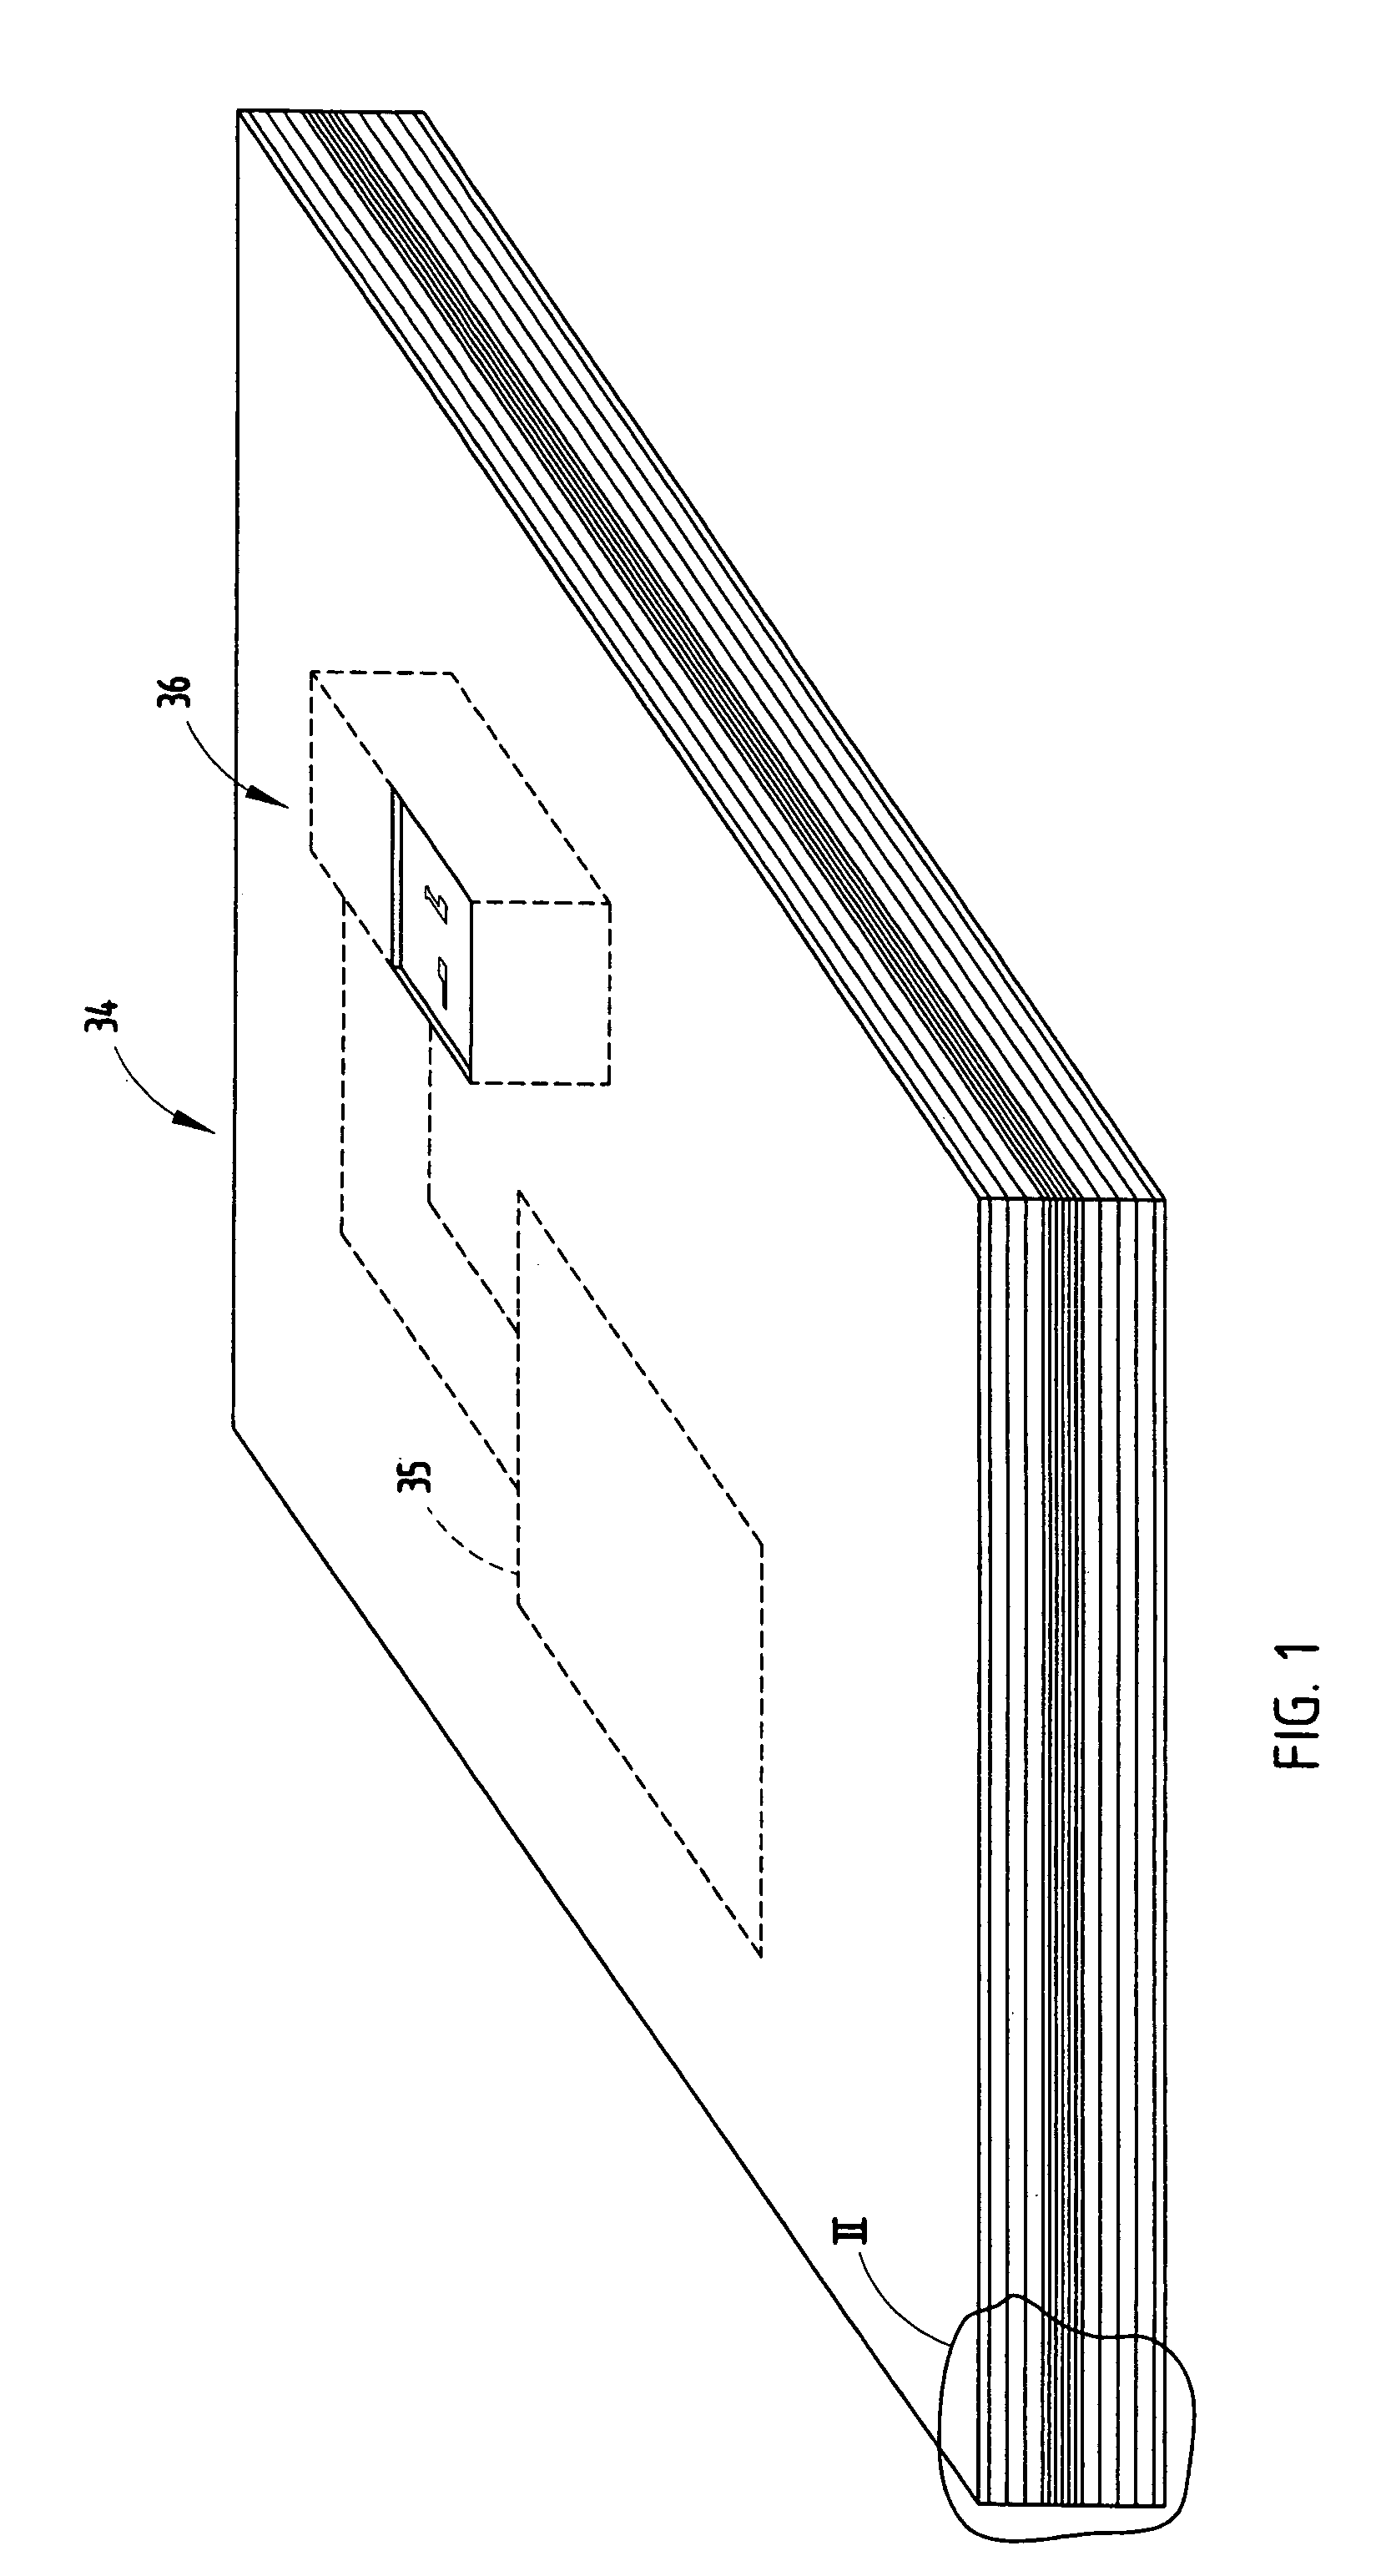 Multi-layer RF filter and balun